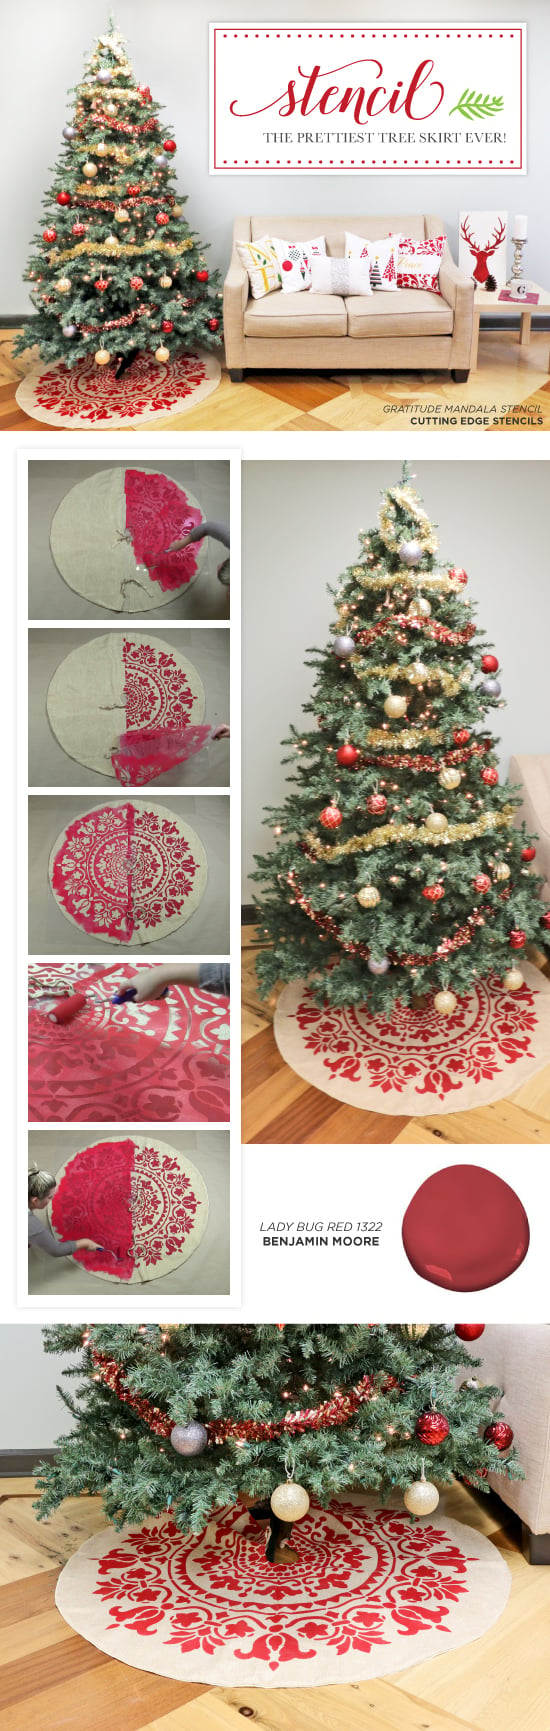 Cutting Edge Stencils shares how to stencil the prettiest DIY Christmas Tree Skirt using the Gratitude Mandala Stencil. http://www.cuttingedgestencils.com/prosperity-mandala-stencil-yoga-mandala-stencils-designs.html